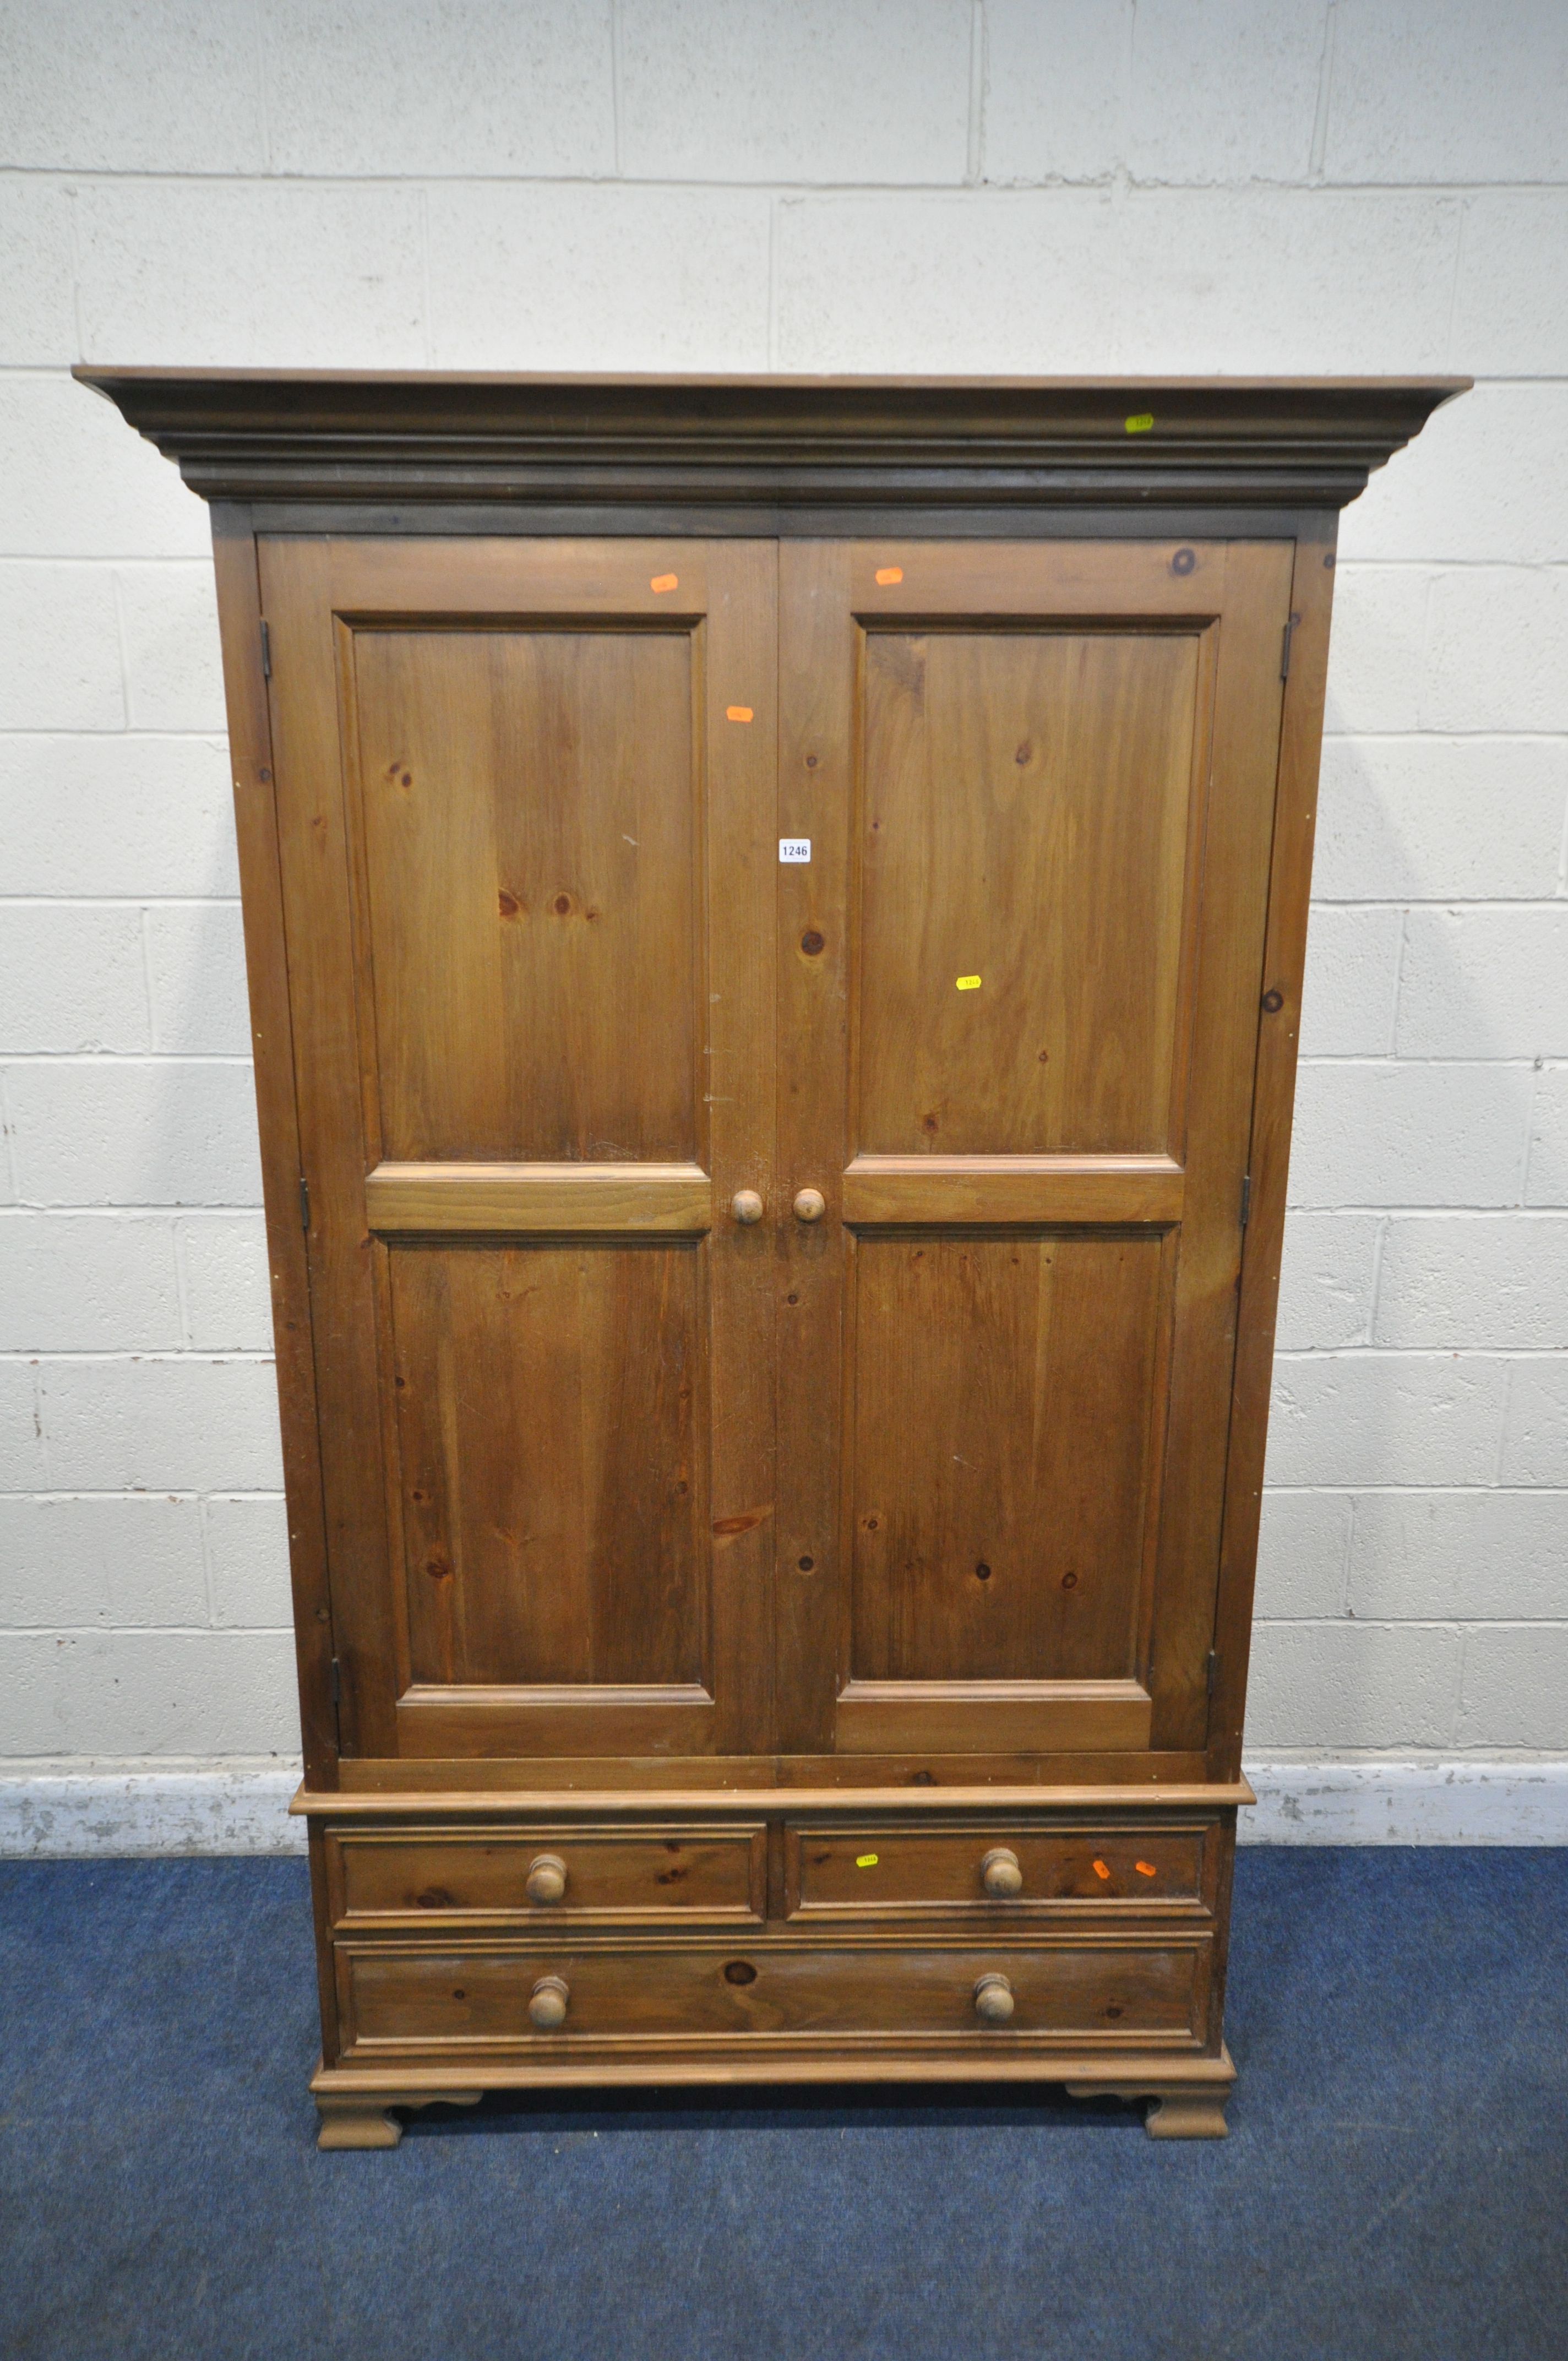 A PINE DOUBLE DOOR WARDROBE, with three drawers, width 130cm x depth 64cm x height 204cm (